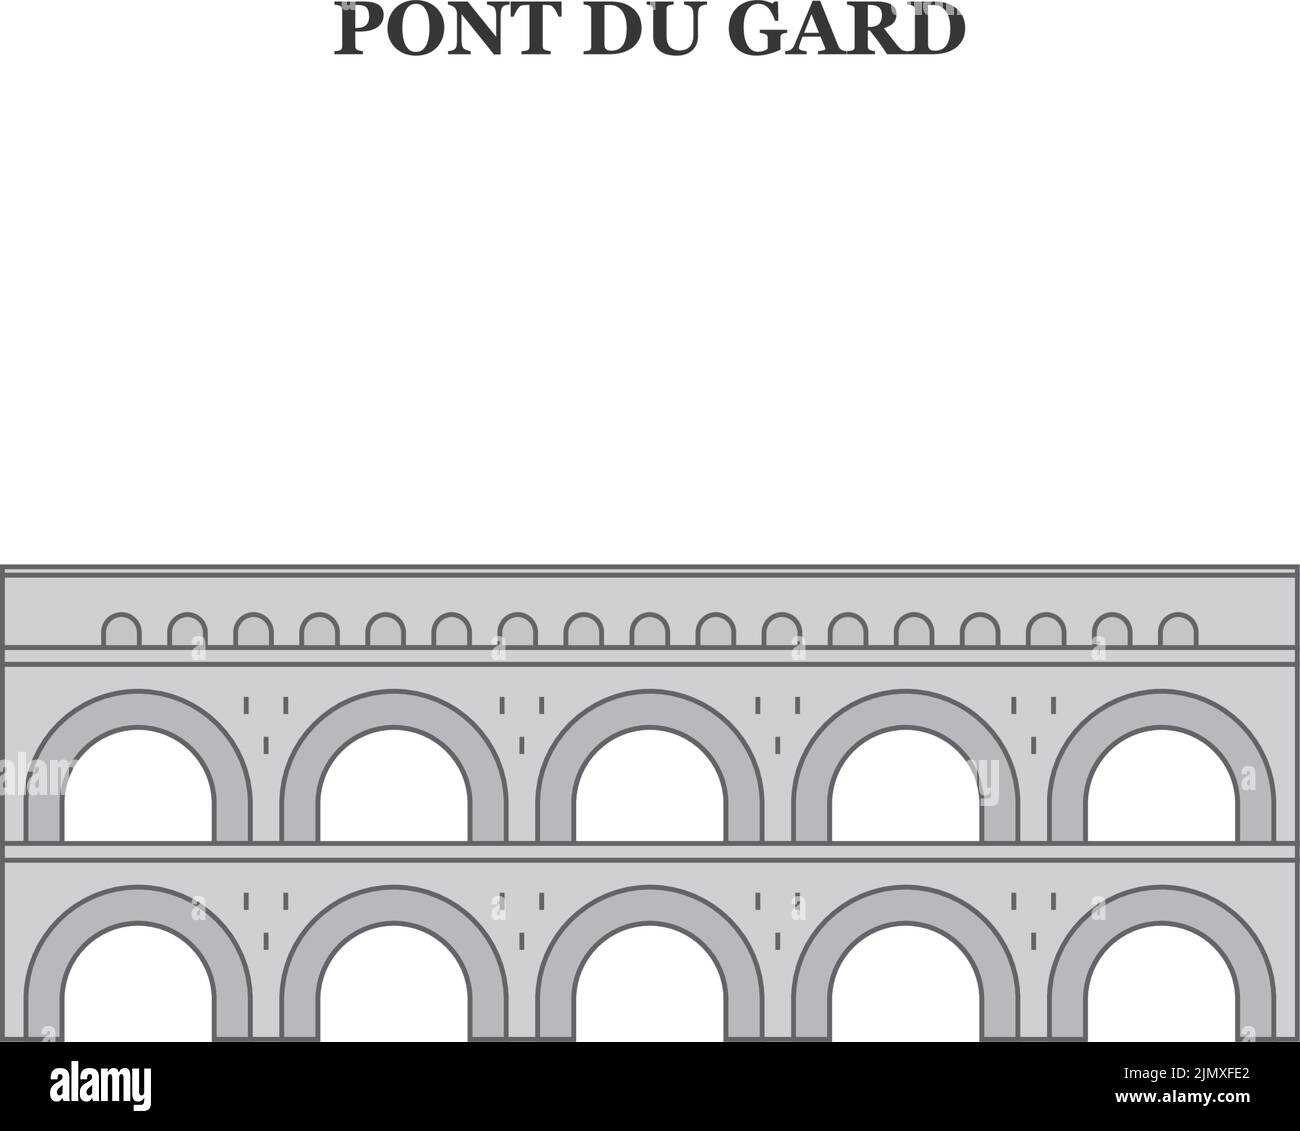 France, Pont Du Gard Landmark city skyline isolated vector illustration, icons Stock Vector